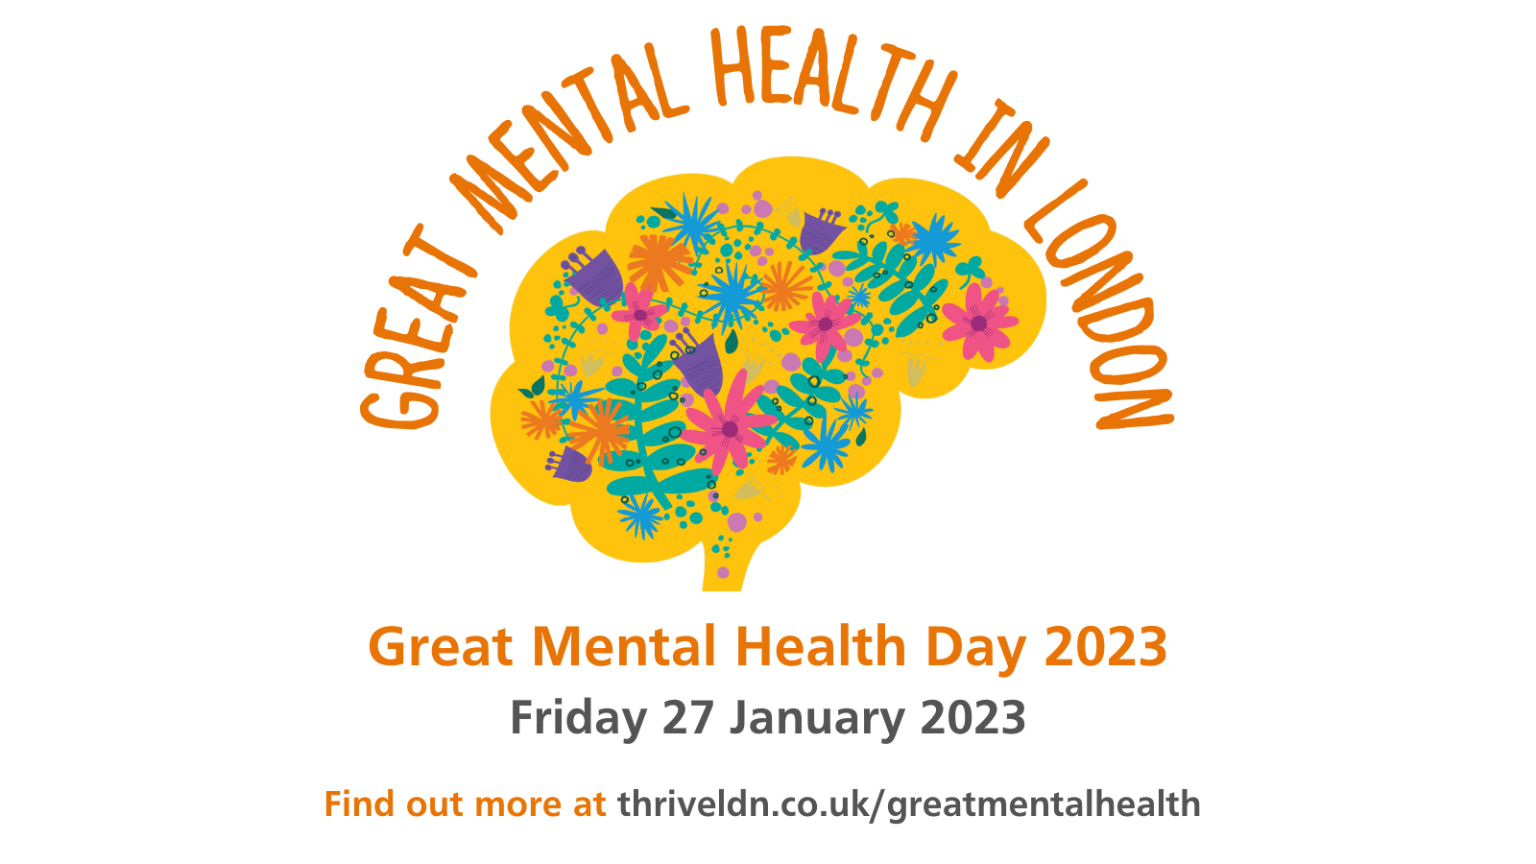 Great Mental Health Day, Friday 27 January.